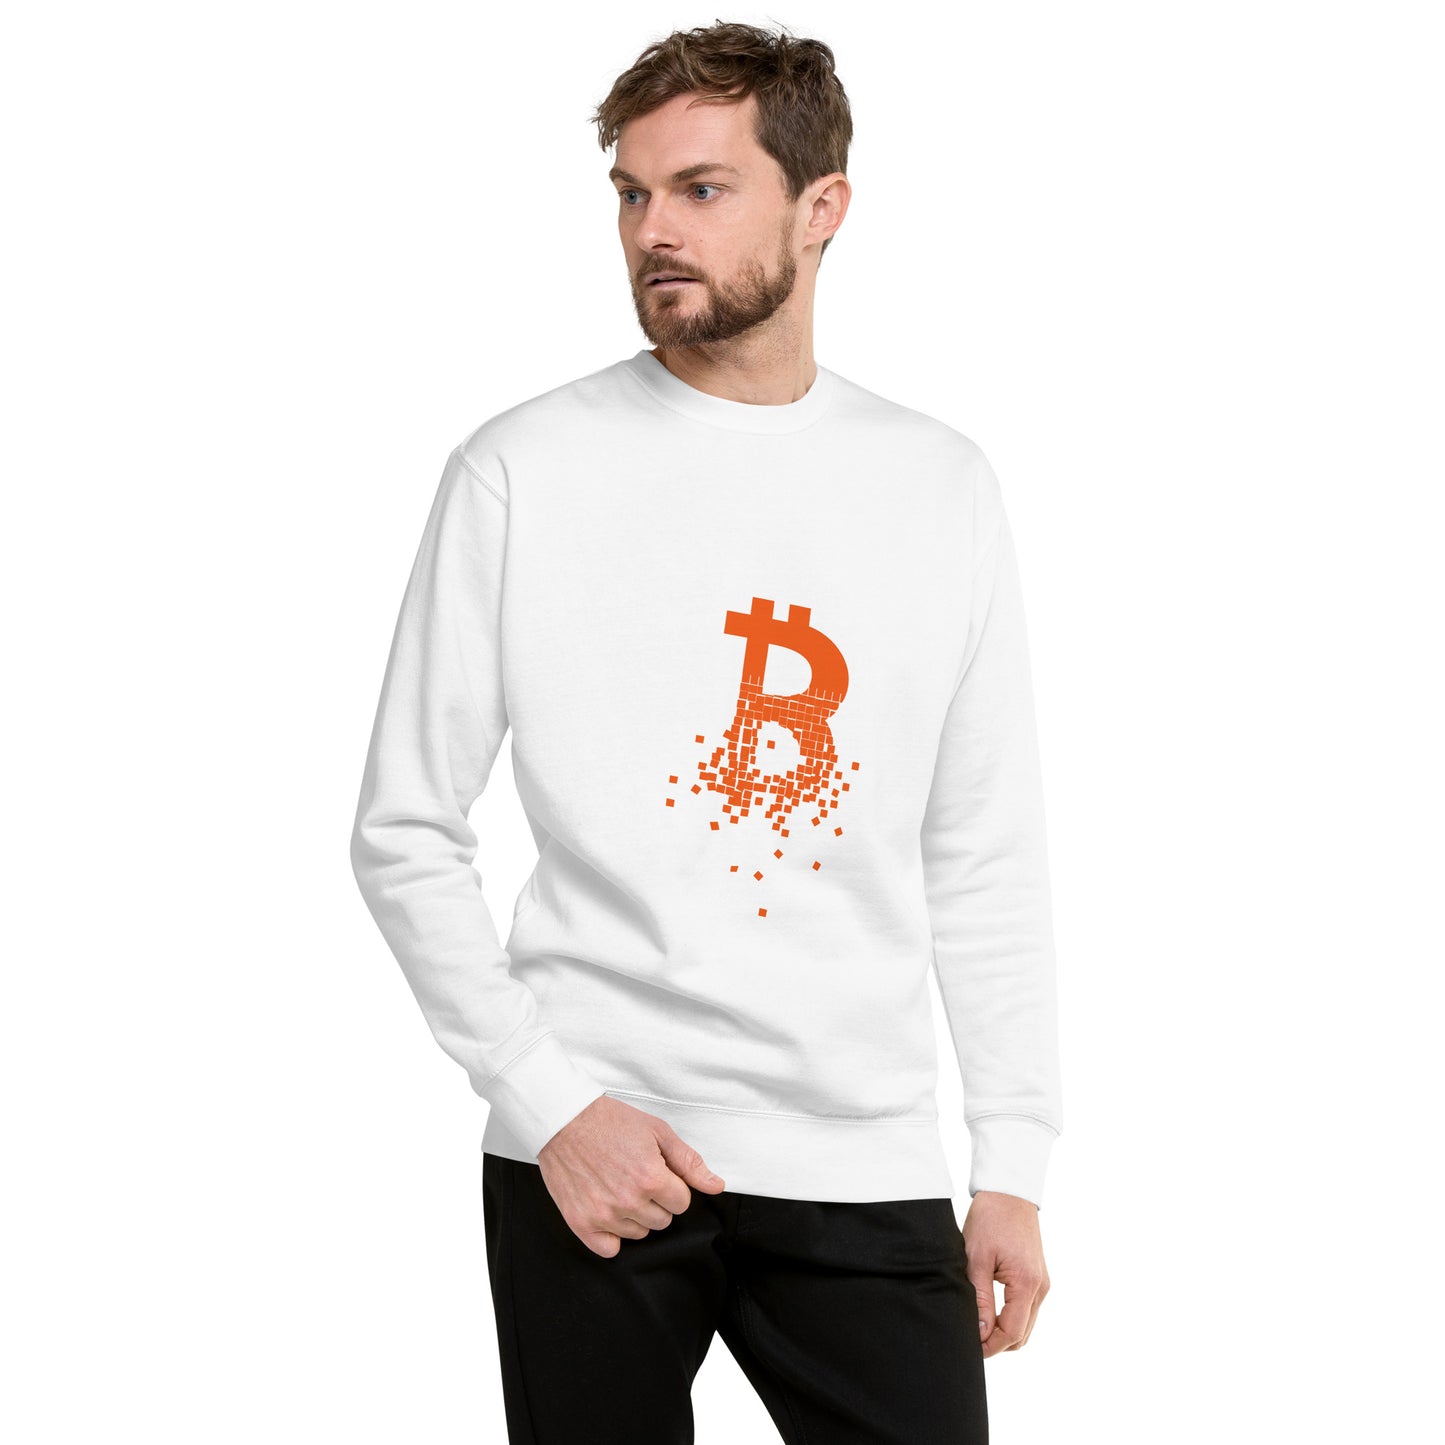 Bitcoin Unisex Premium Sweatshirt